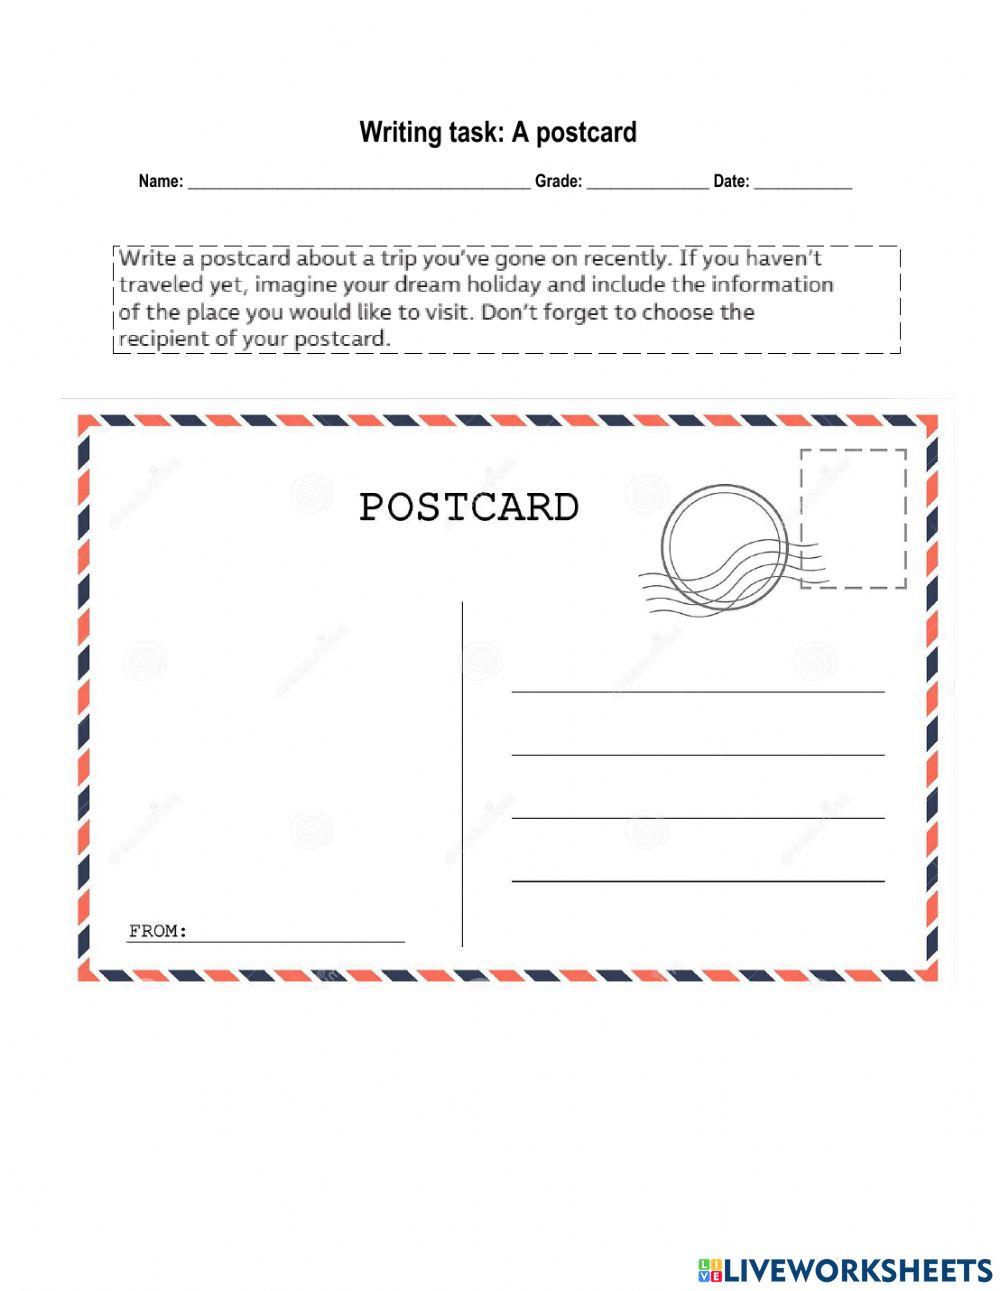 Writing task: A postcard